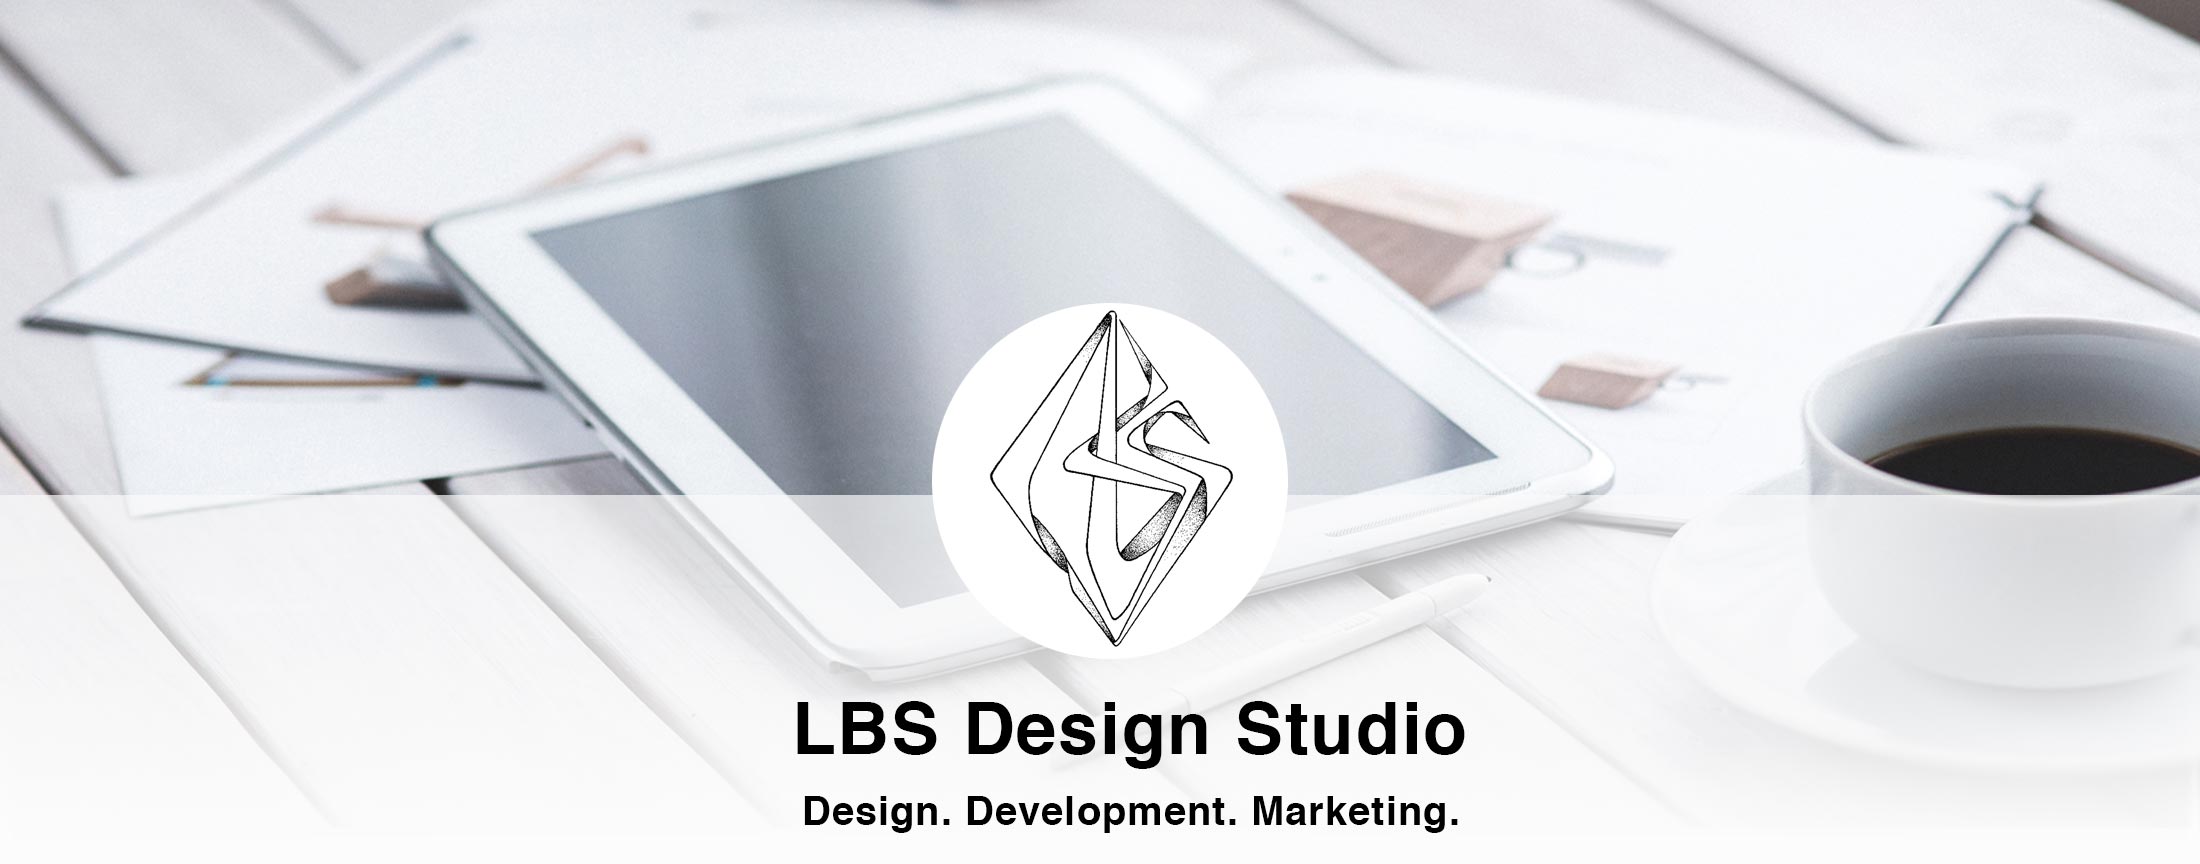 Web Design | Website Design | SEO | St Pete | Clearwater | Tampa | LBS Design Studio 33714